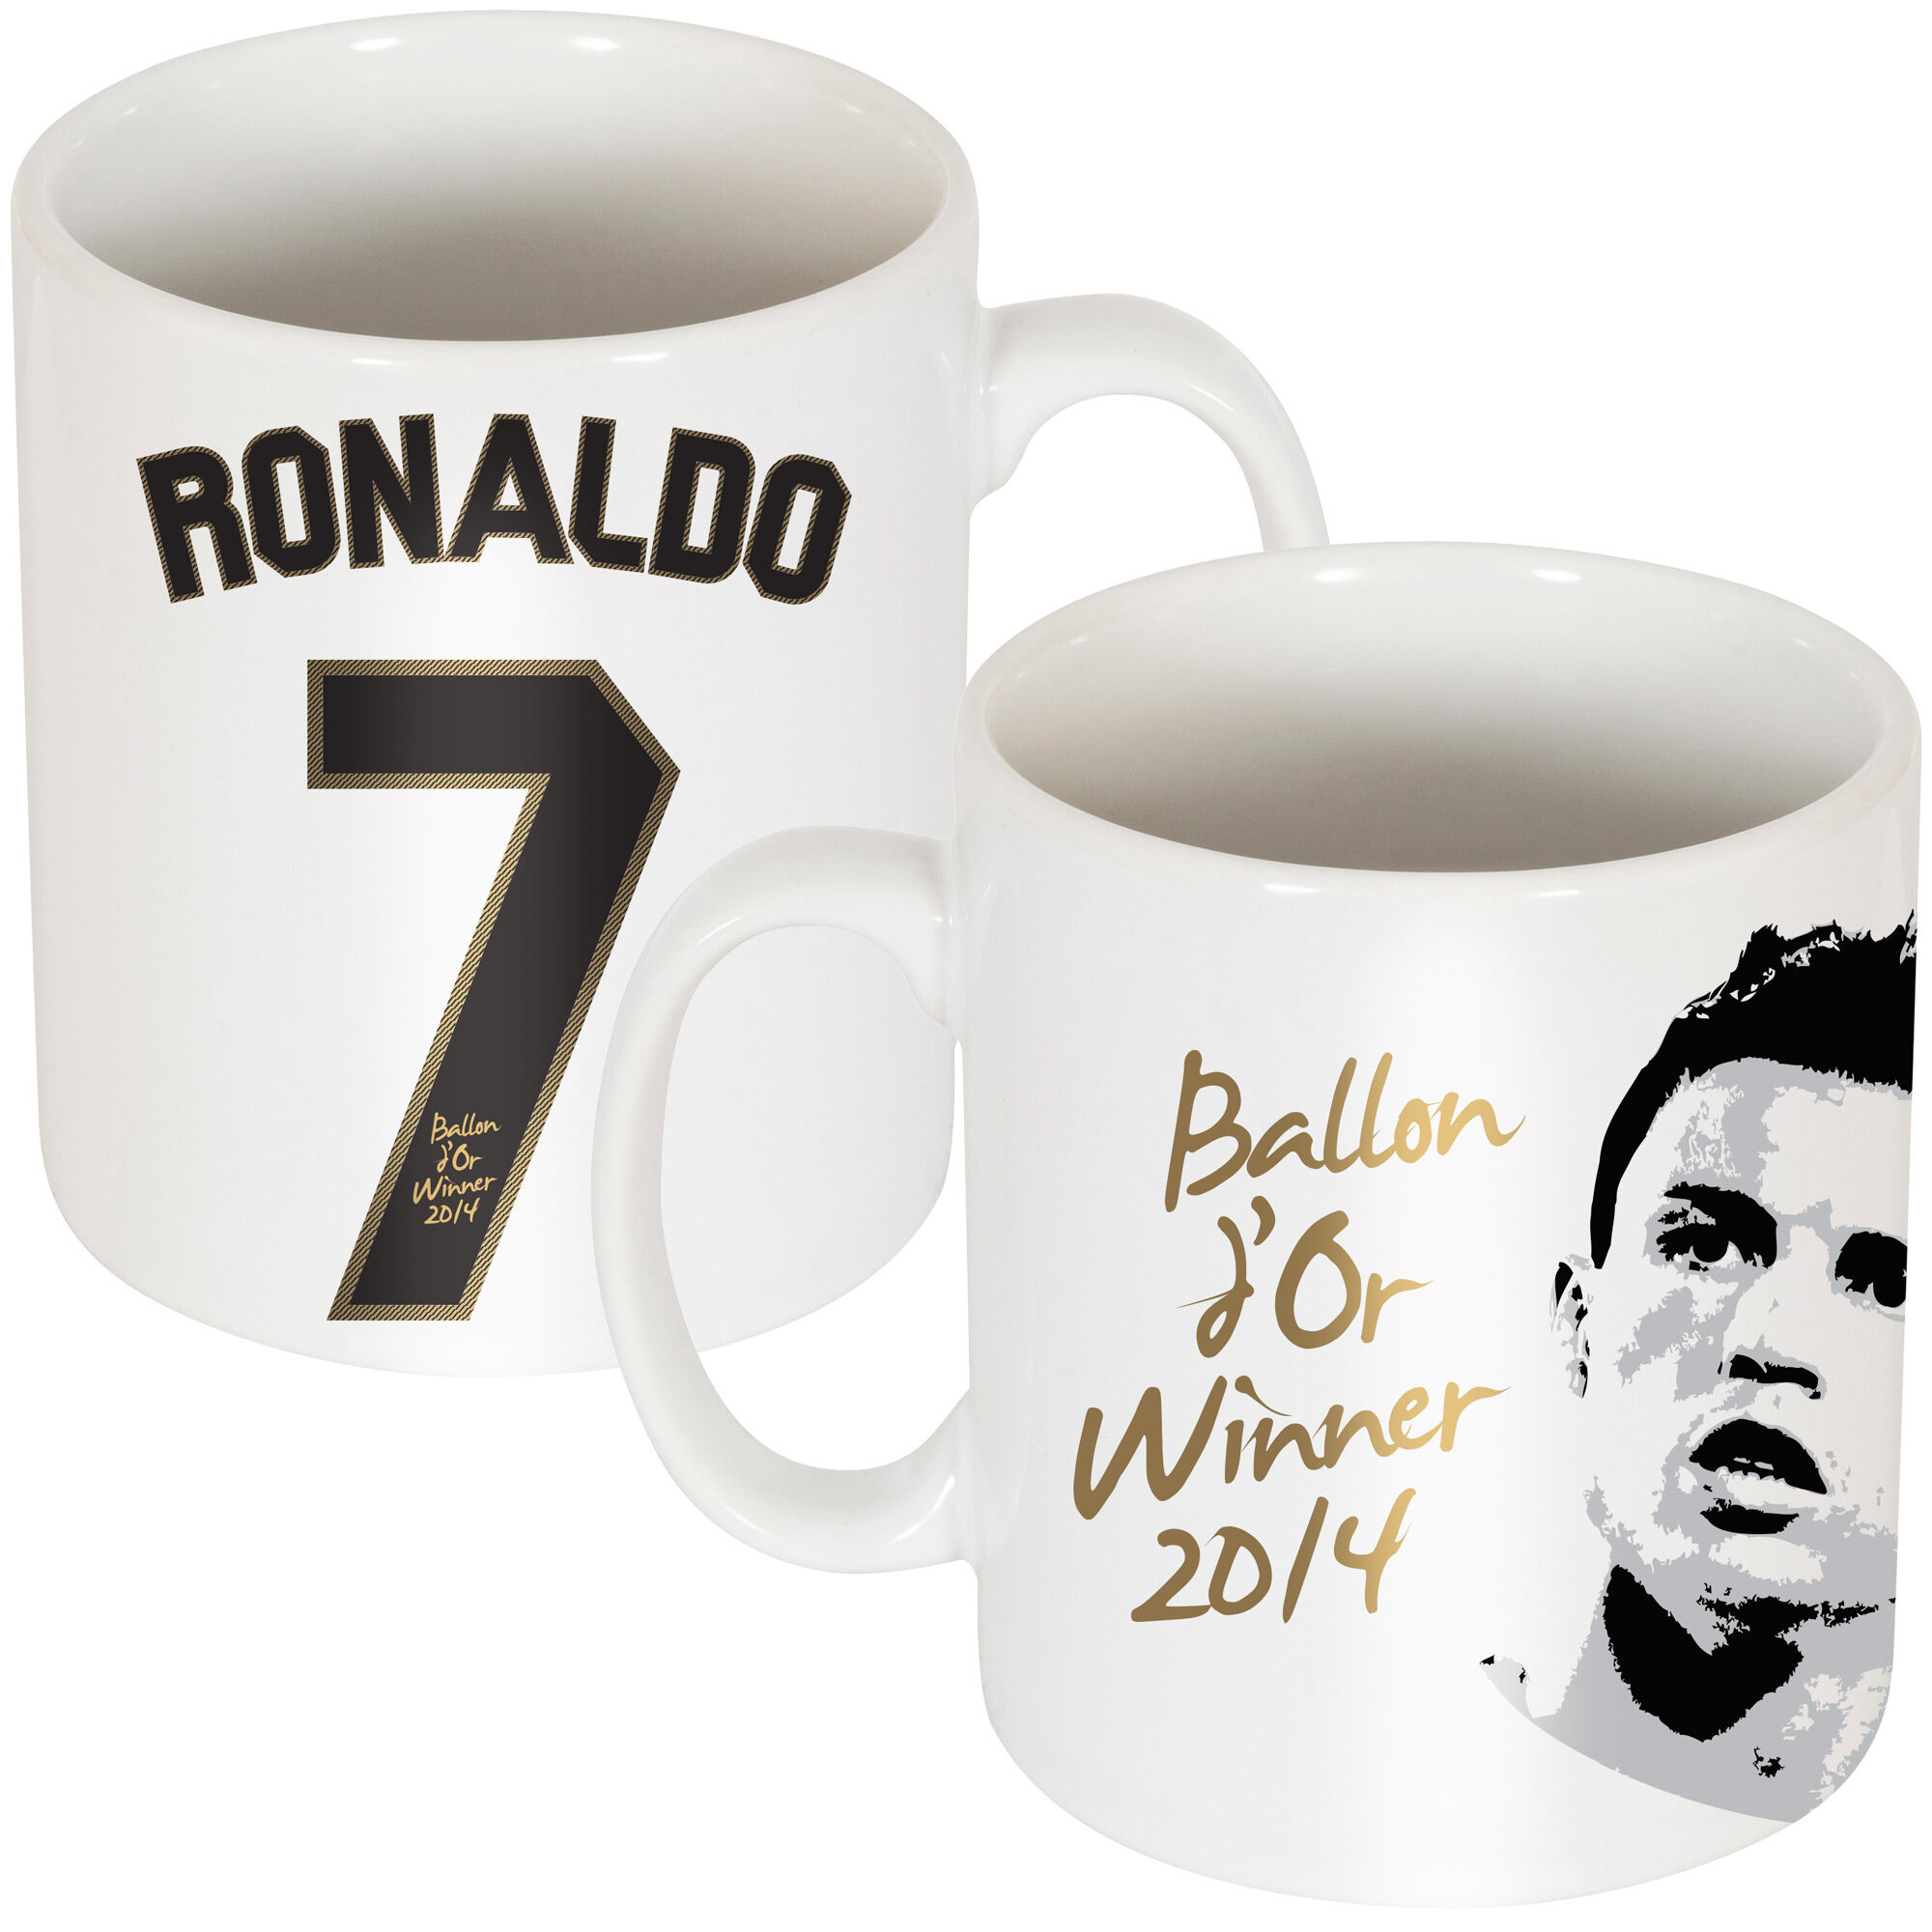 Real Madrid - Hrnek "Ballon d'Or" - bílý, Ronaldo